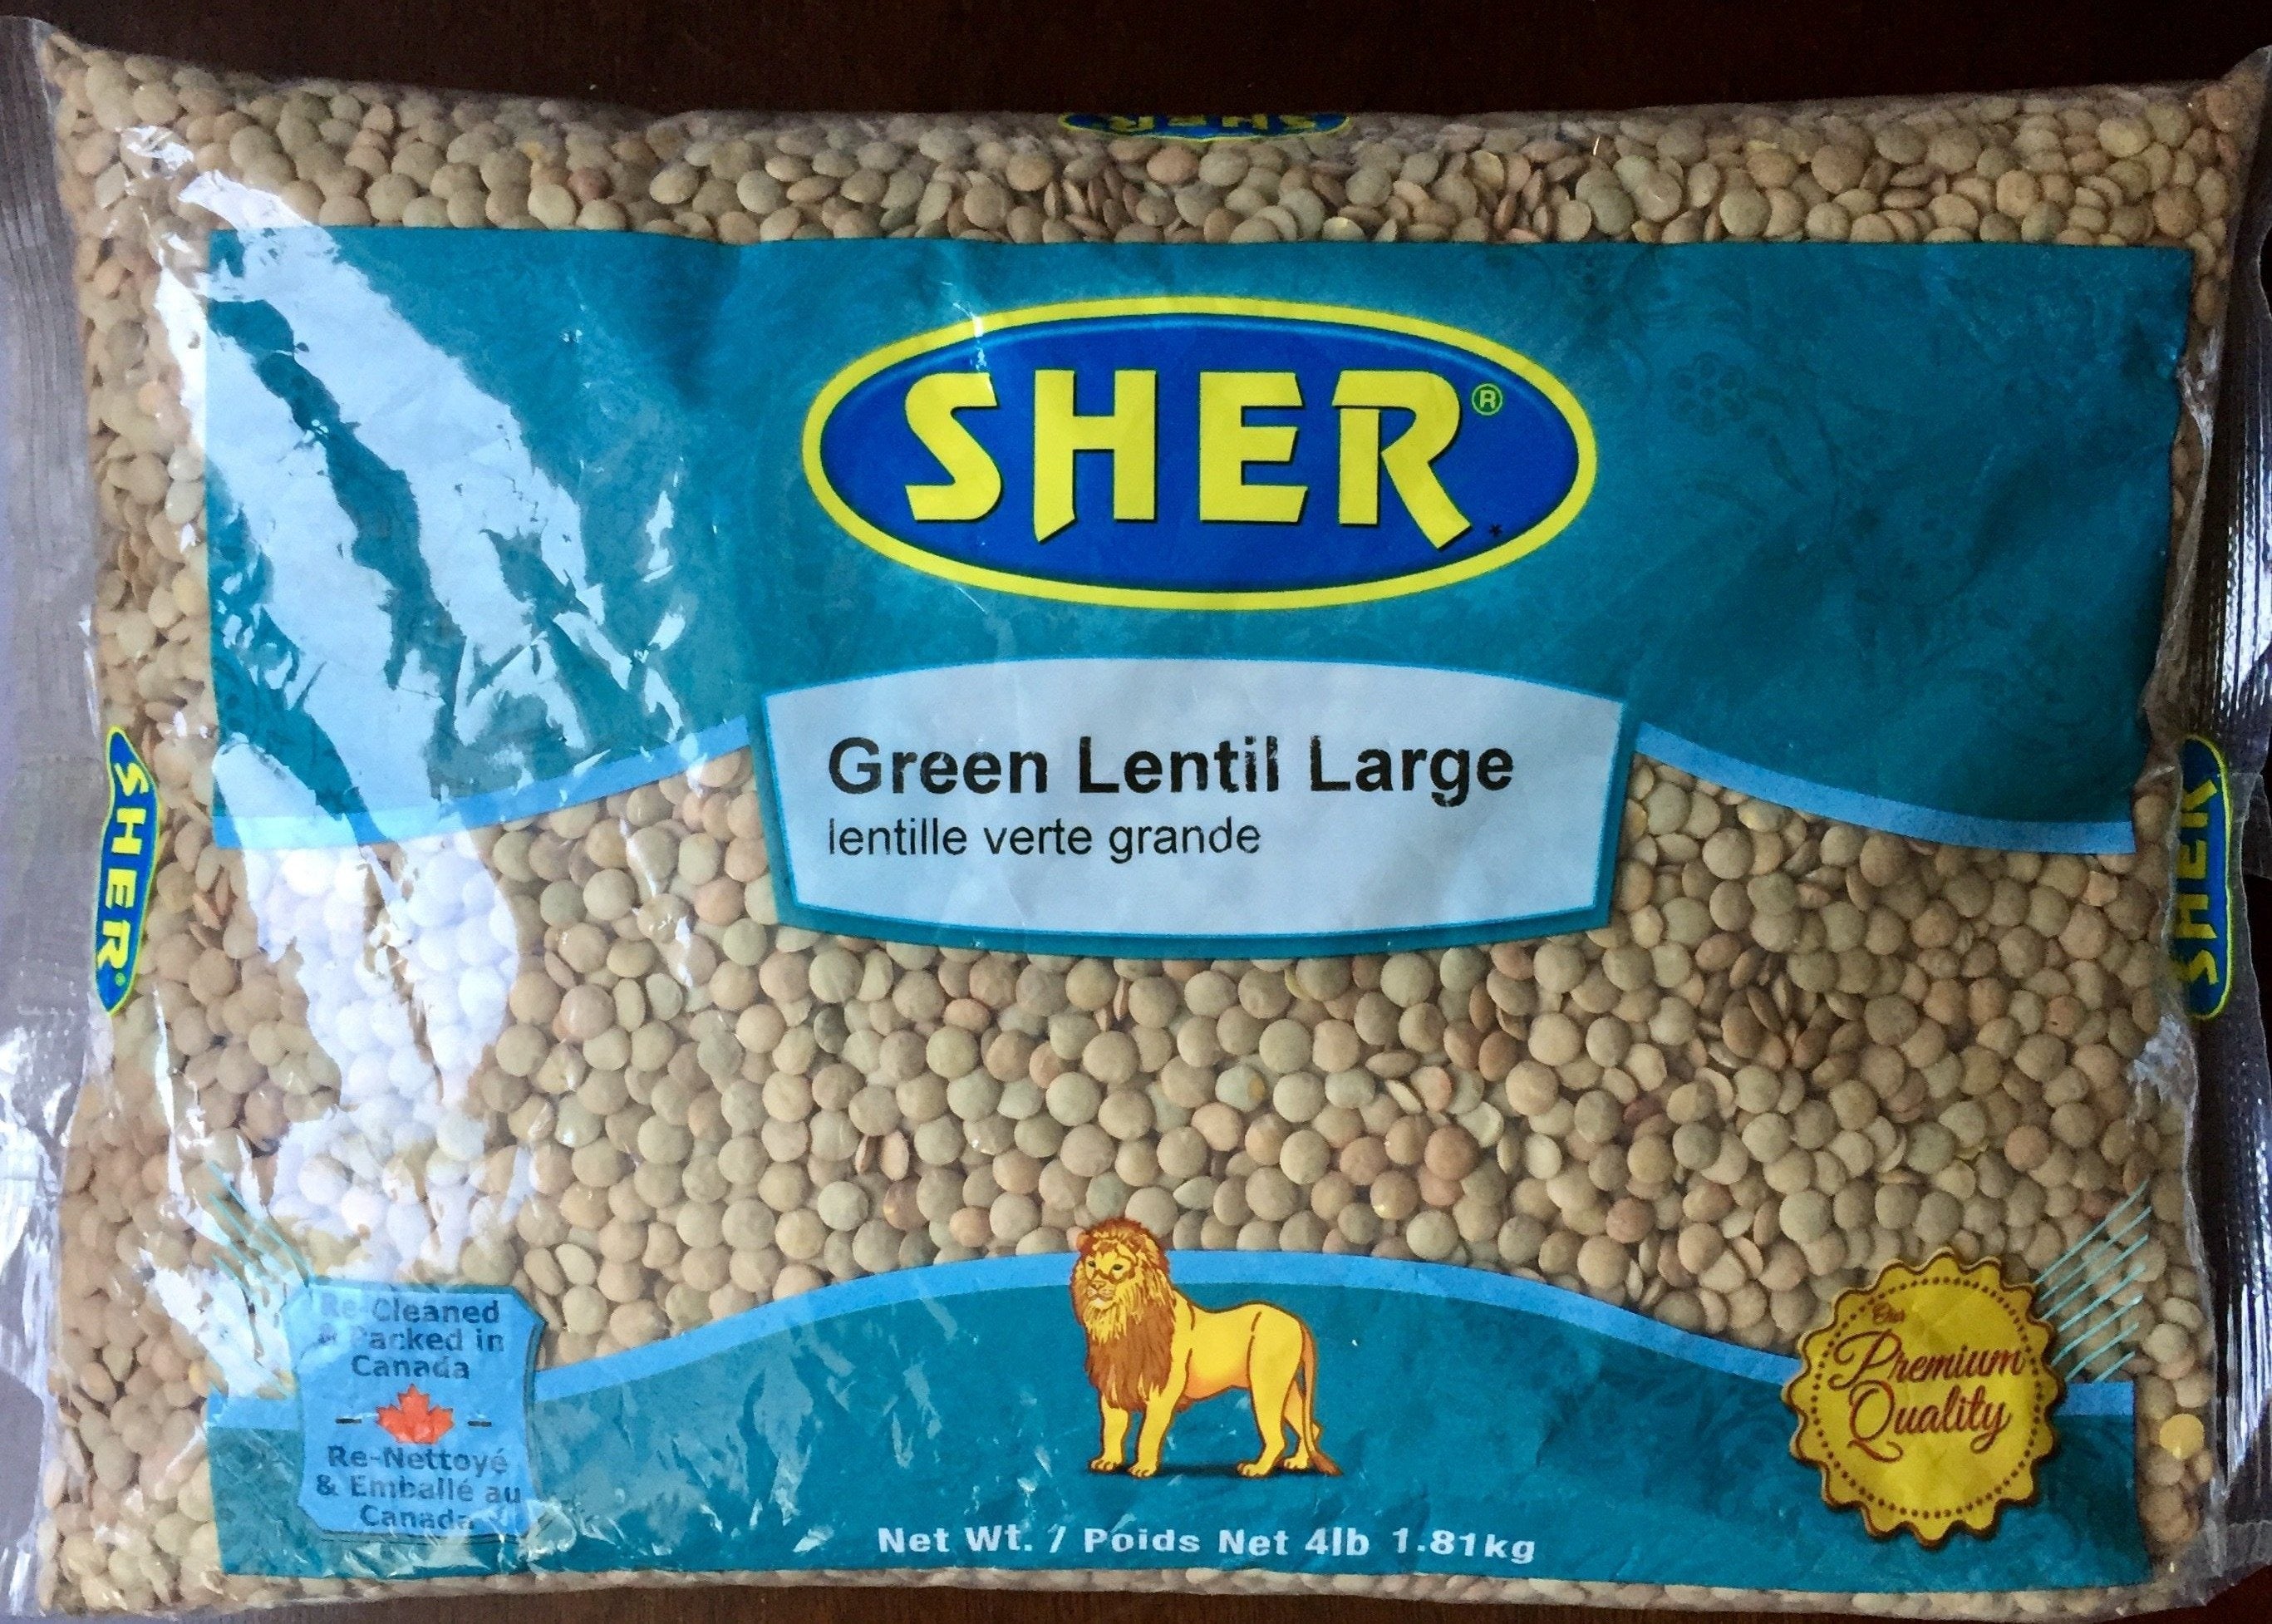 Green Lentil Large - Whole - 4 lb - Sher